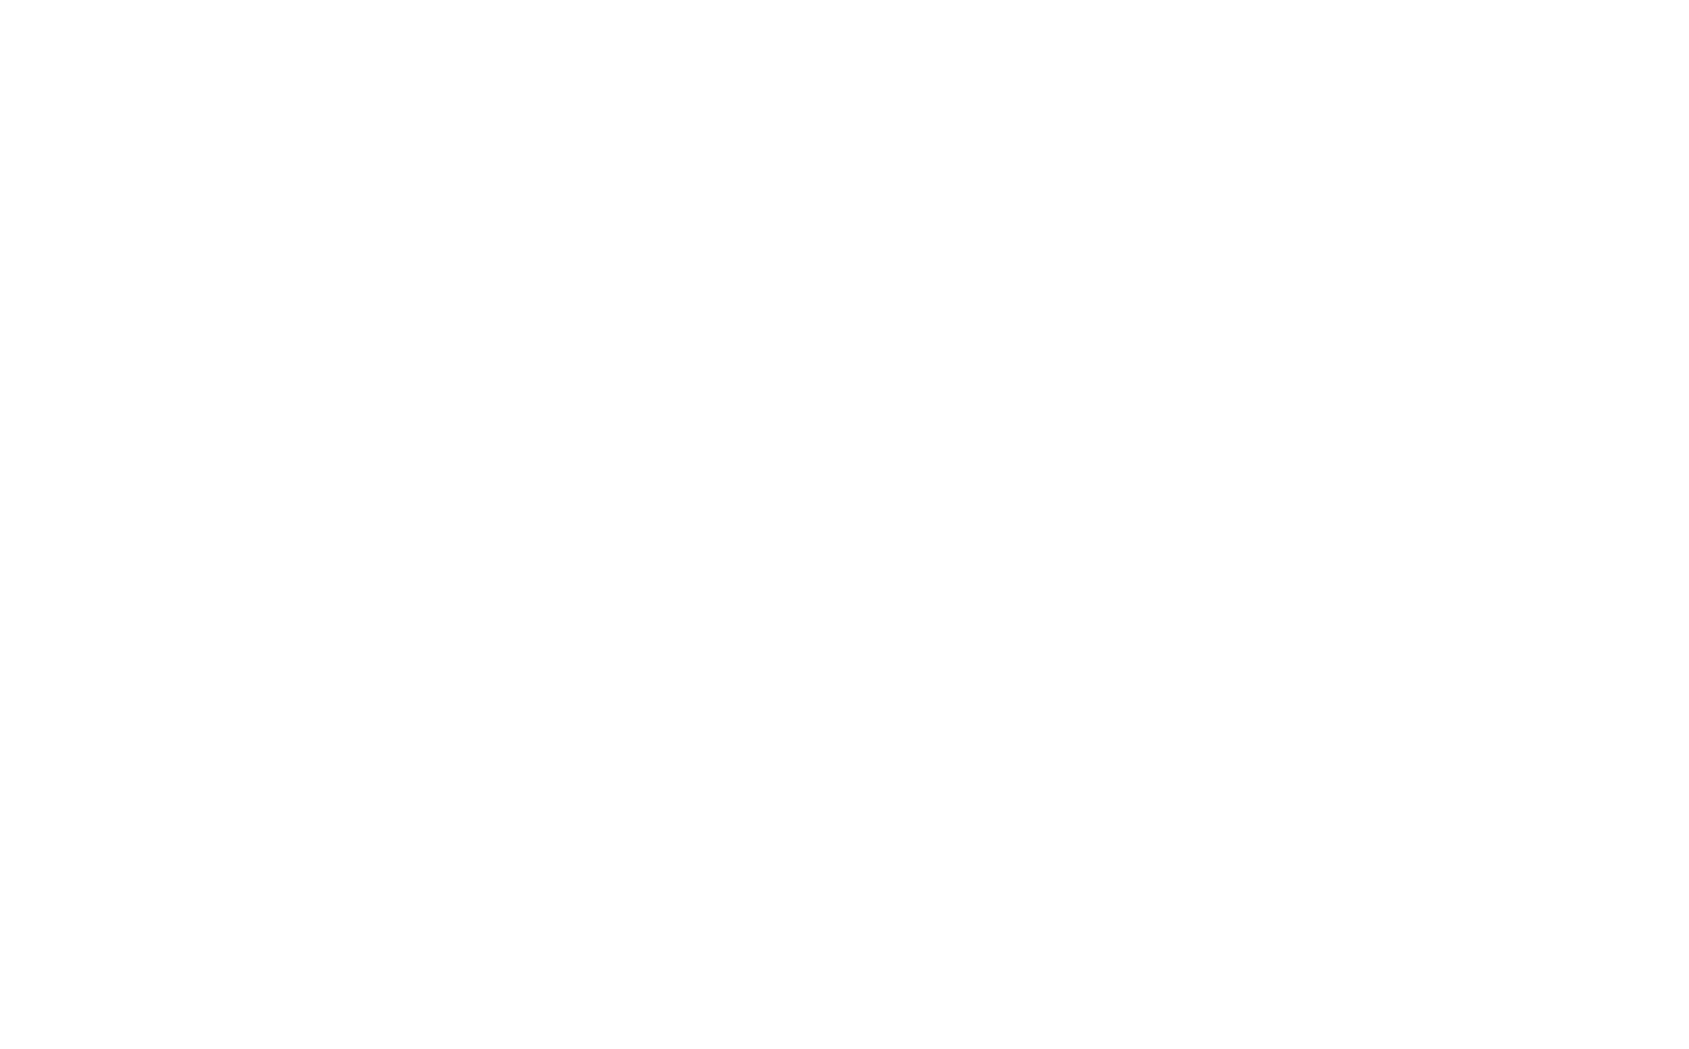 Emma's logo